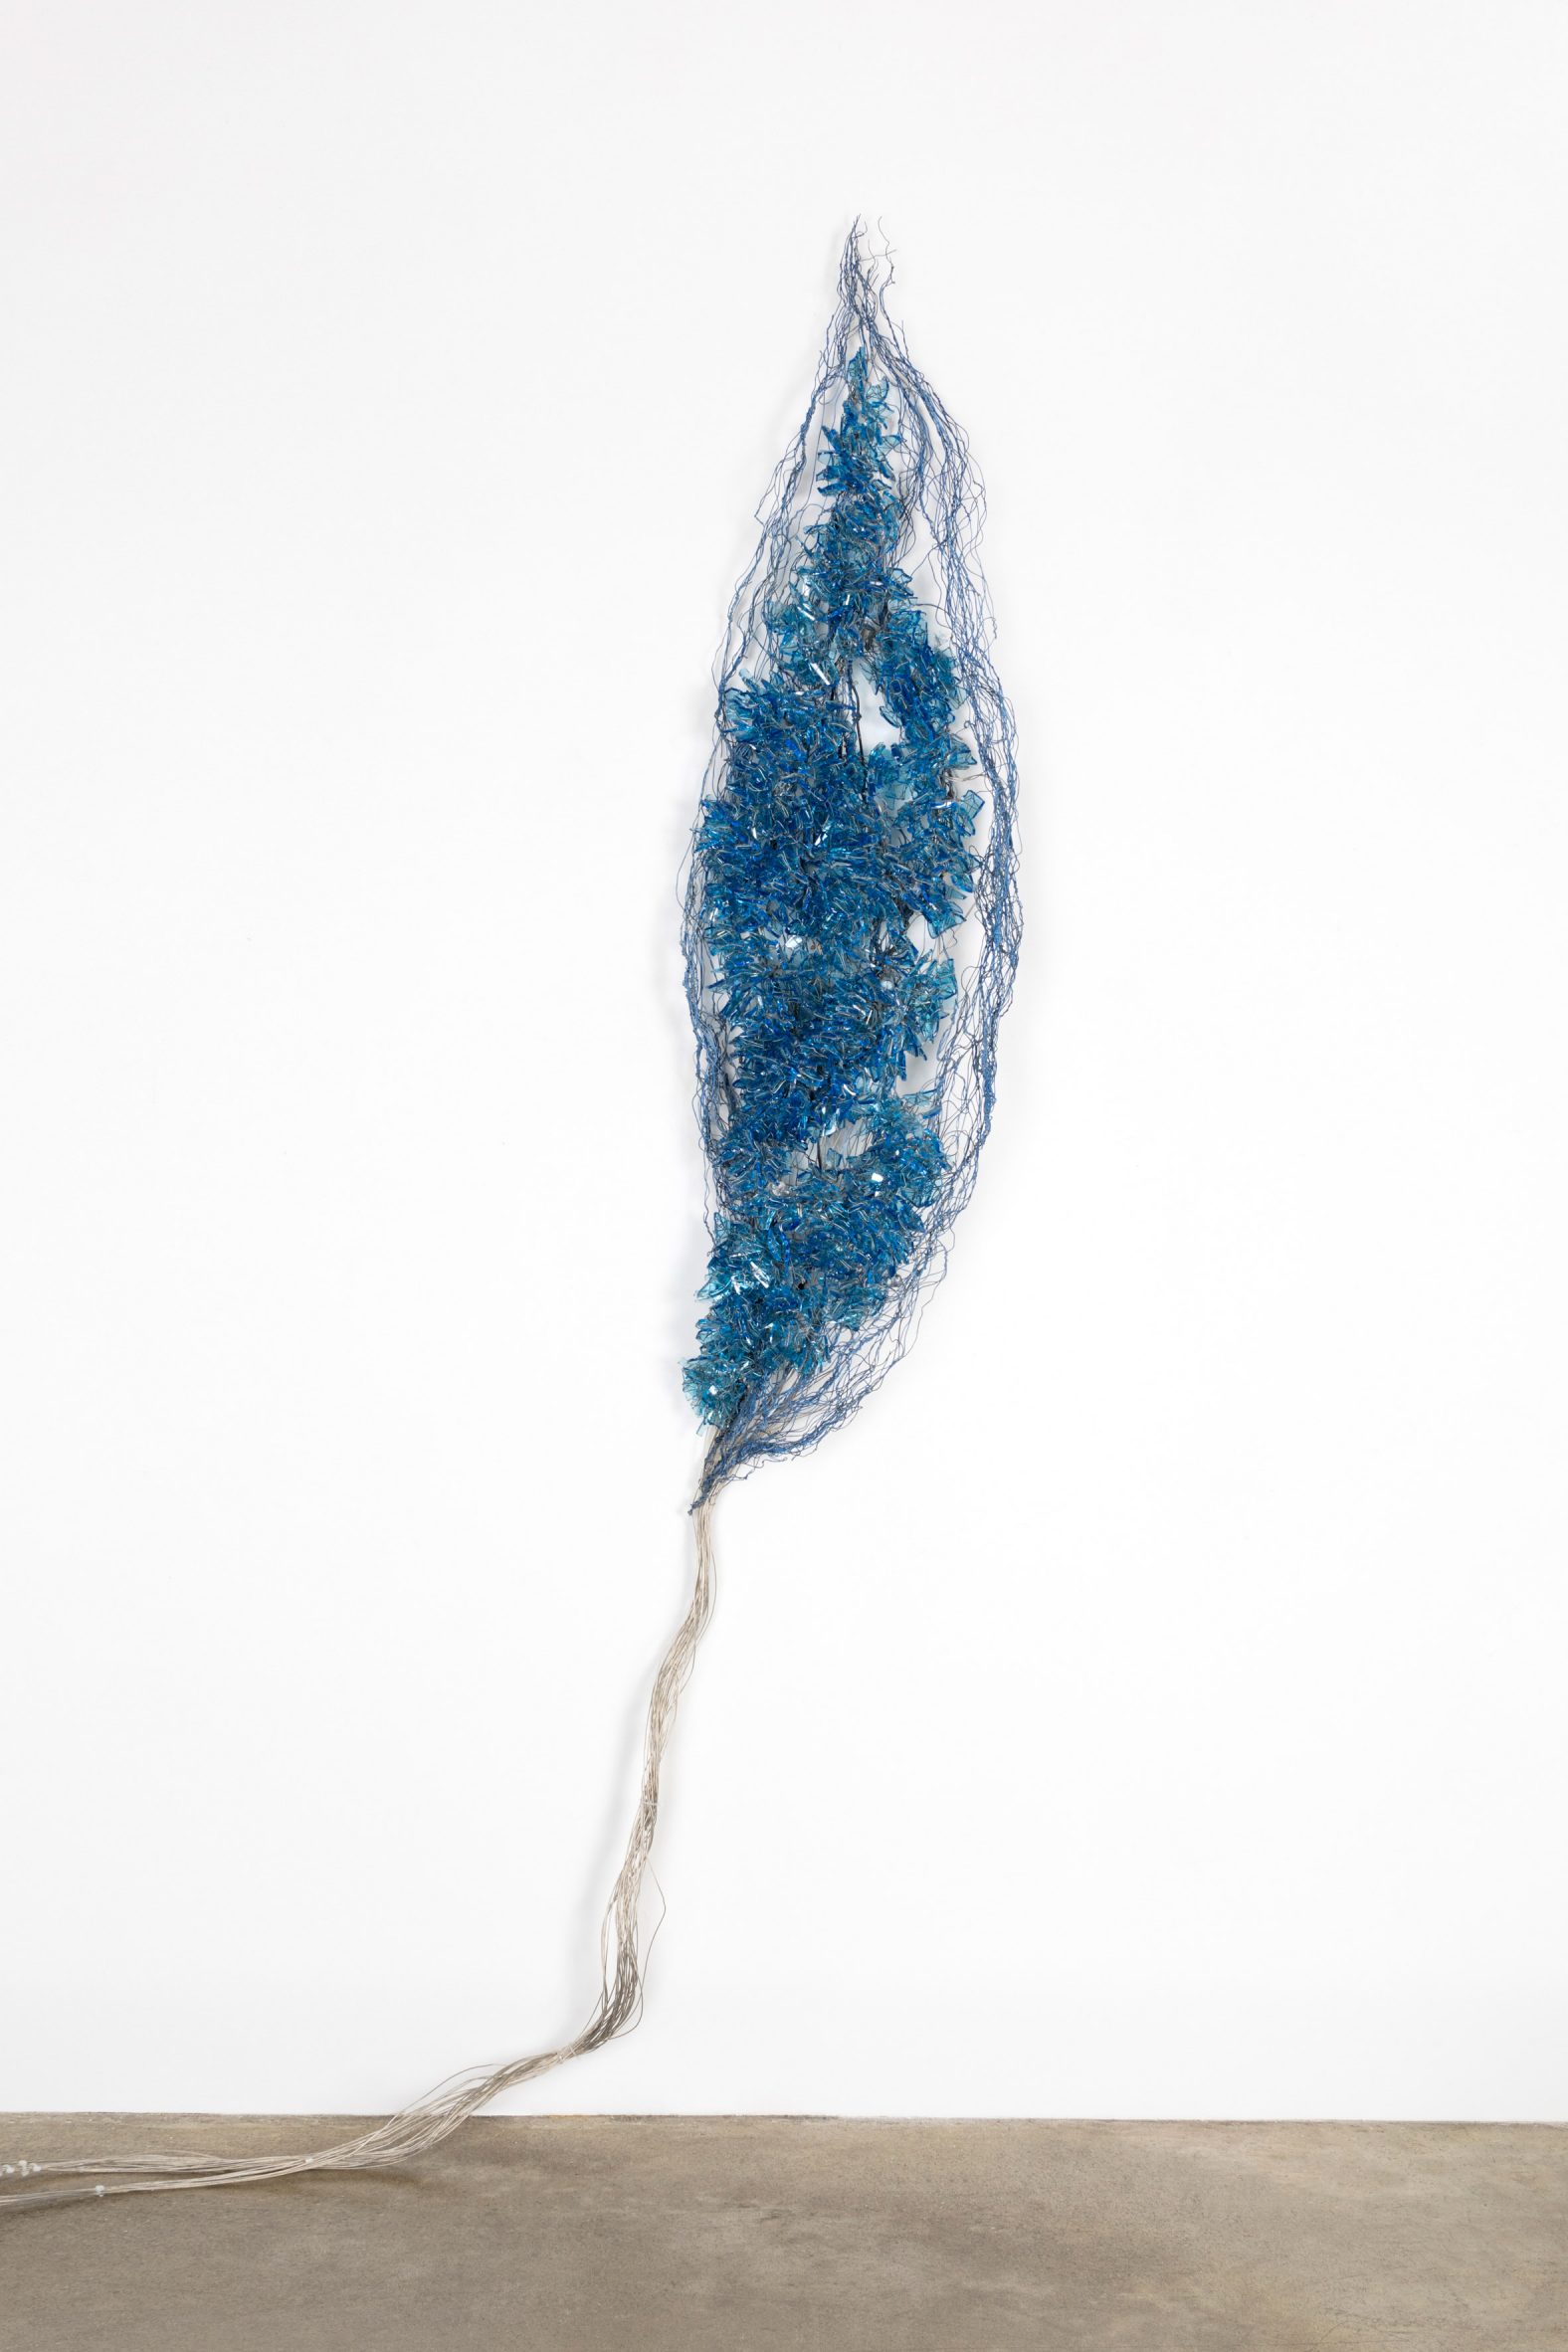 A blue feather light by Deborah Thomas